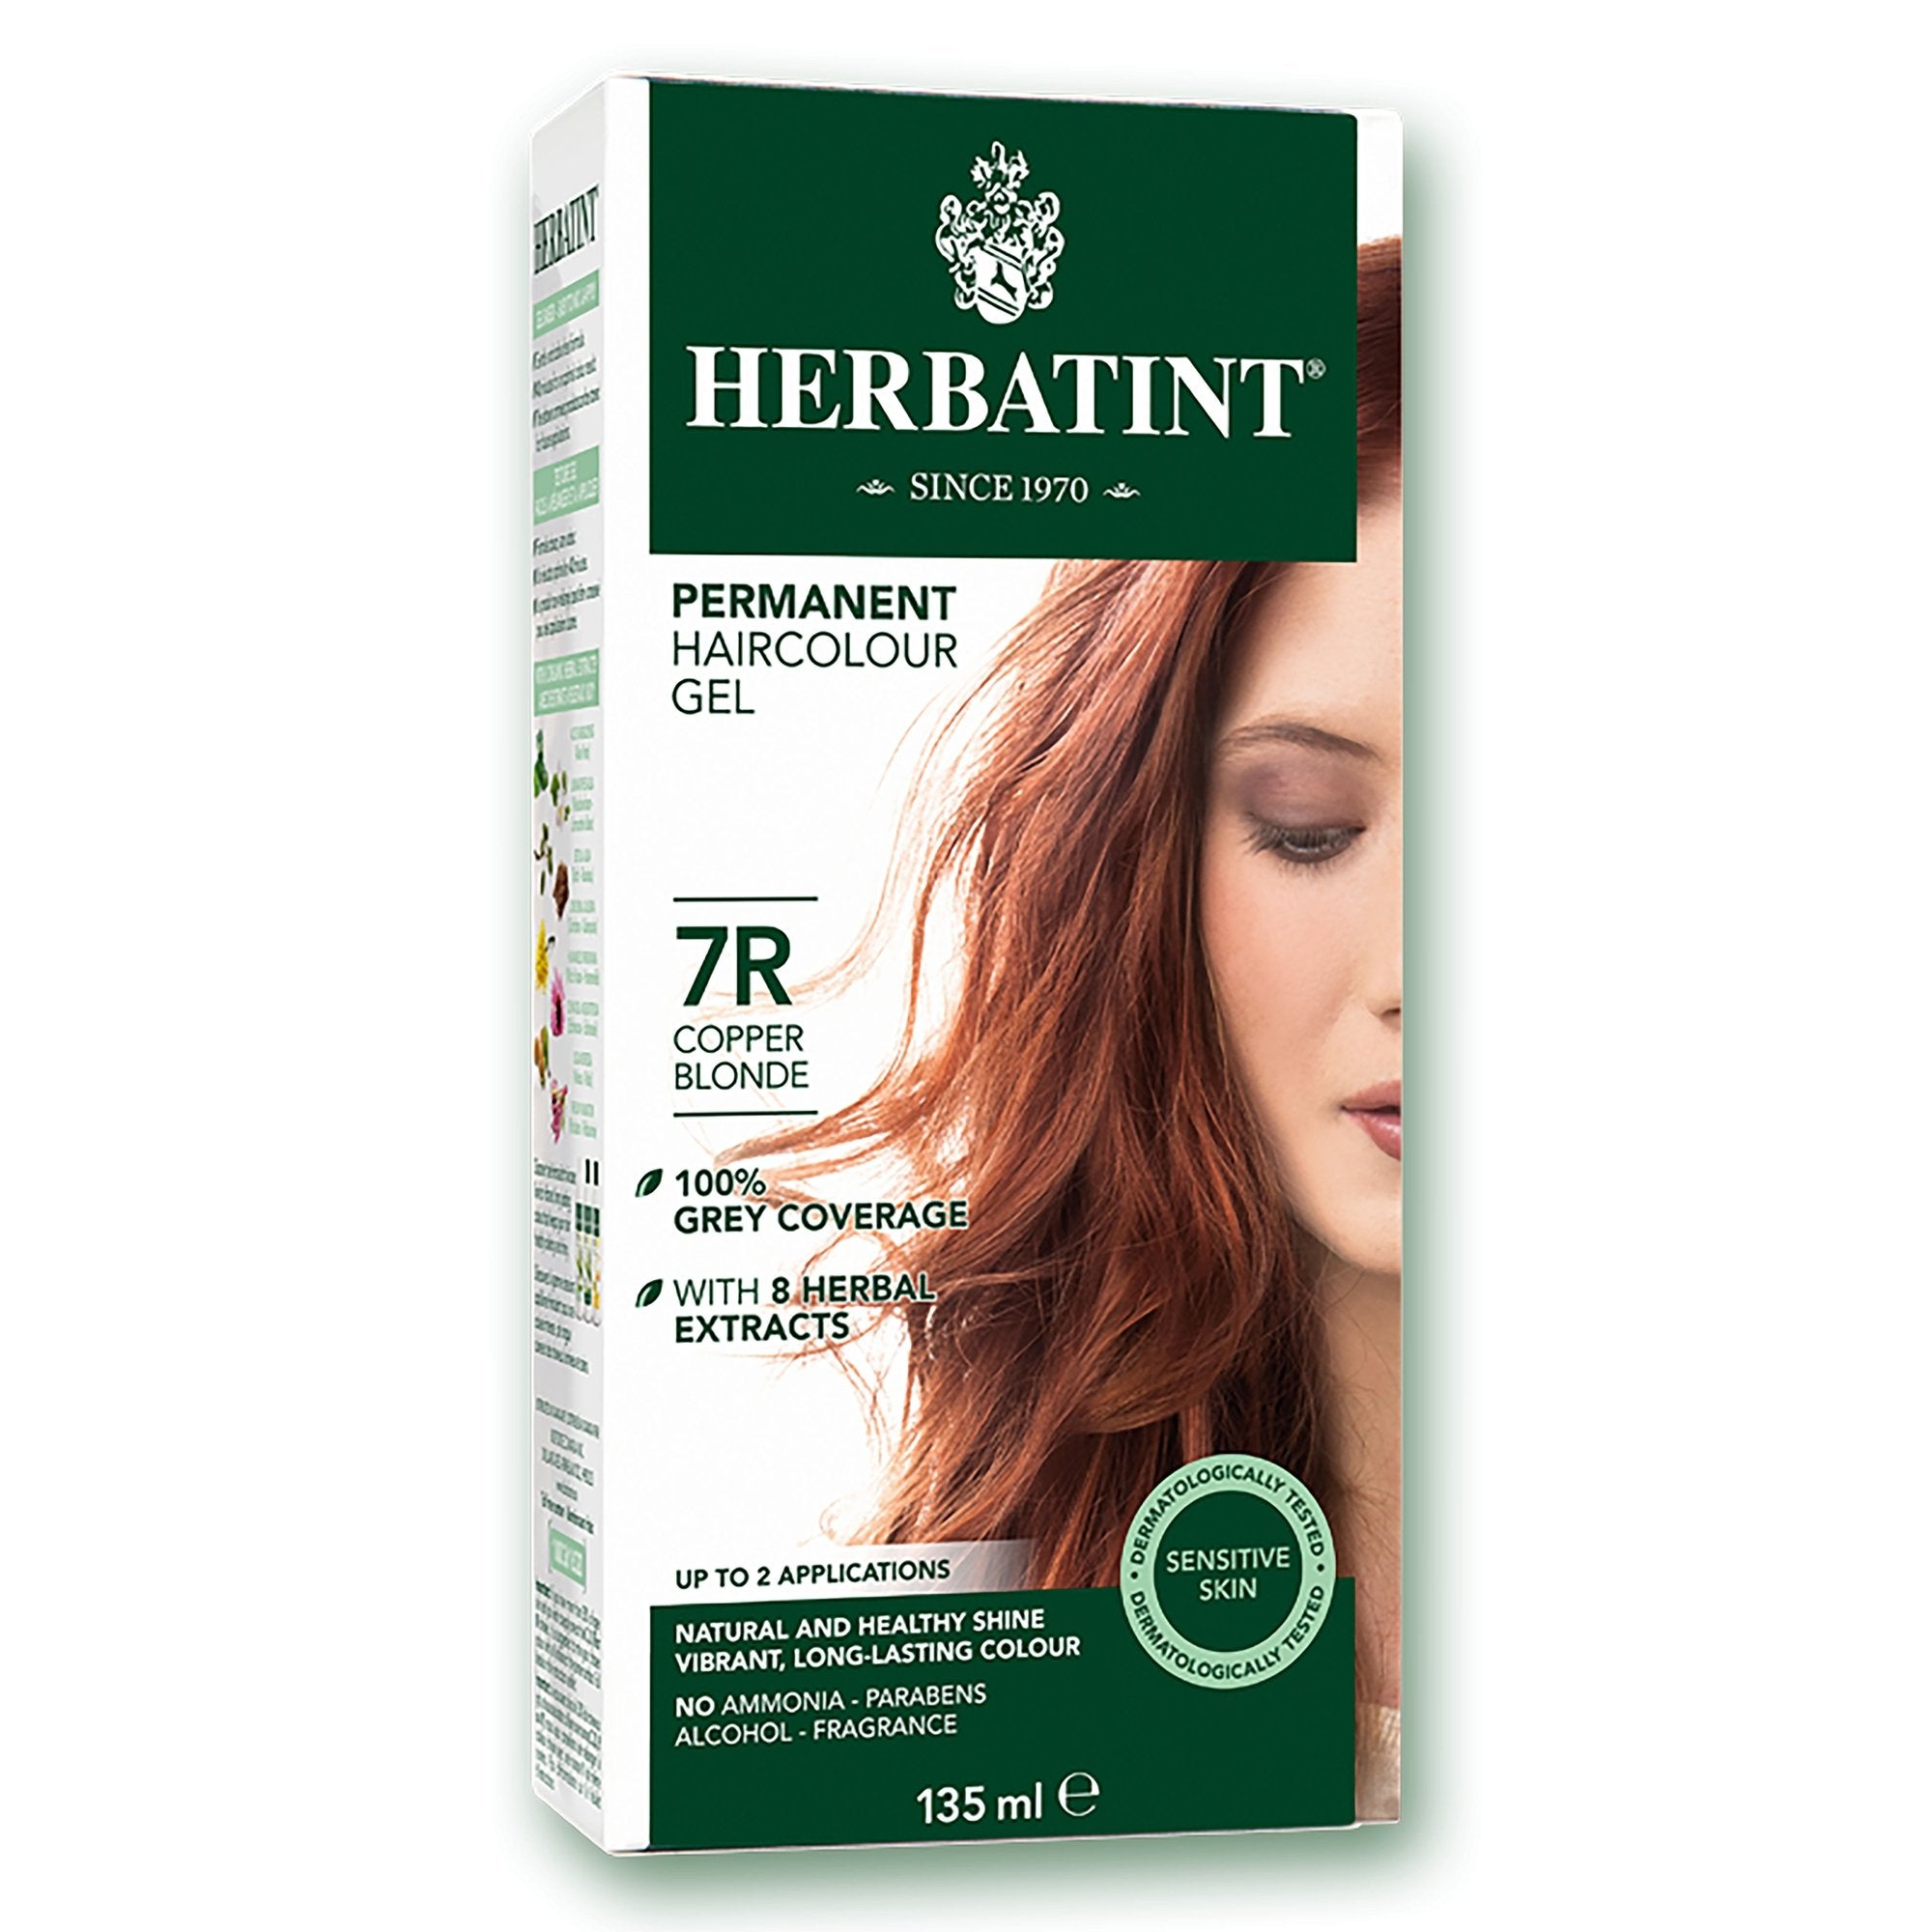 7R Copper Blonde Permanent Haircolour Gel Herbatint 135 mL - A.Vogel Canada